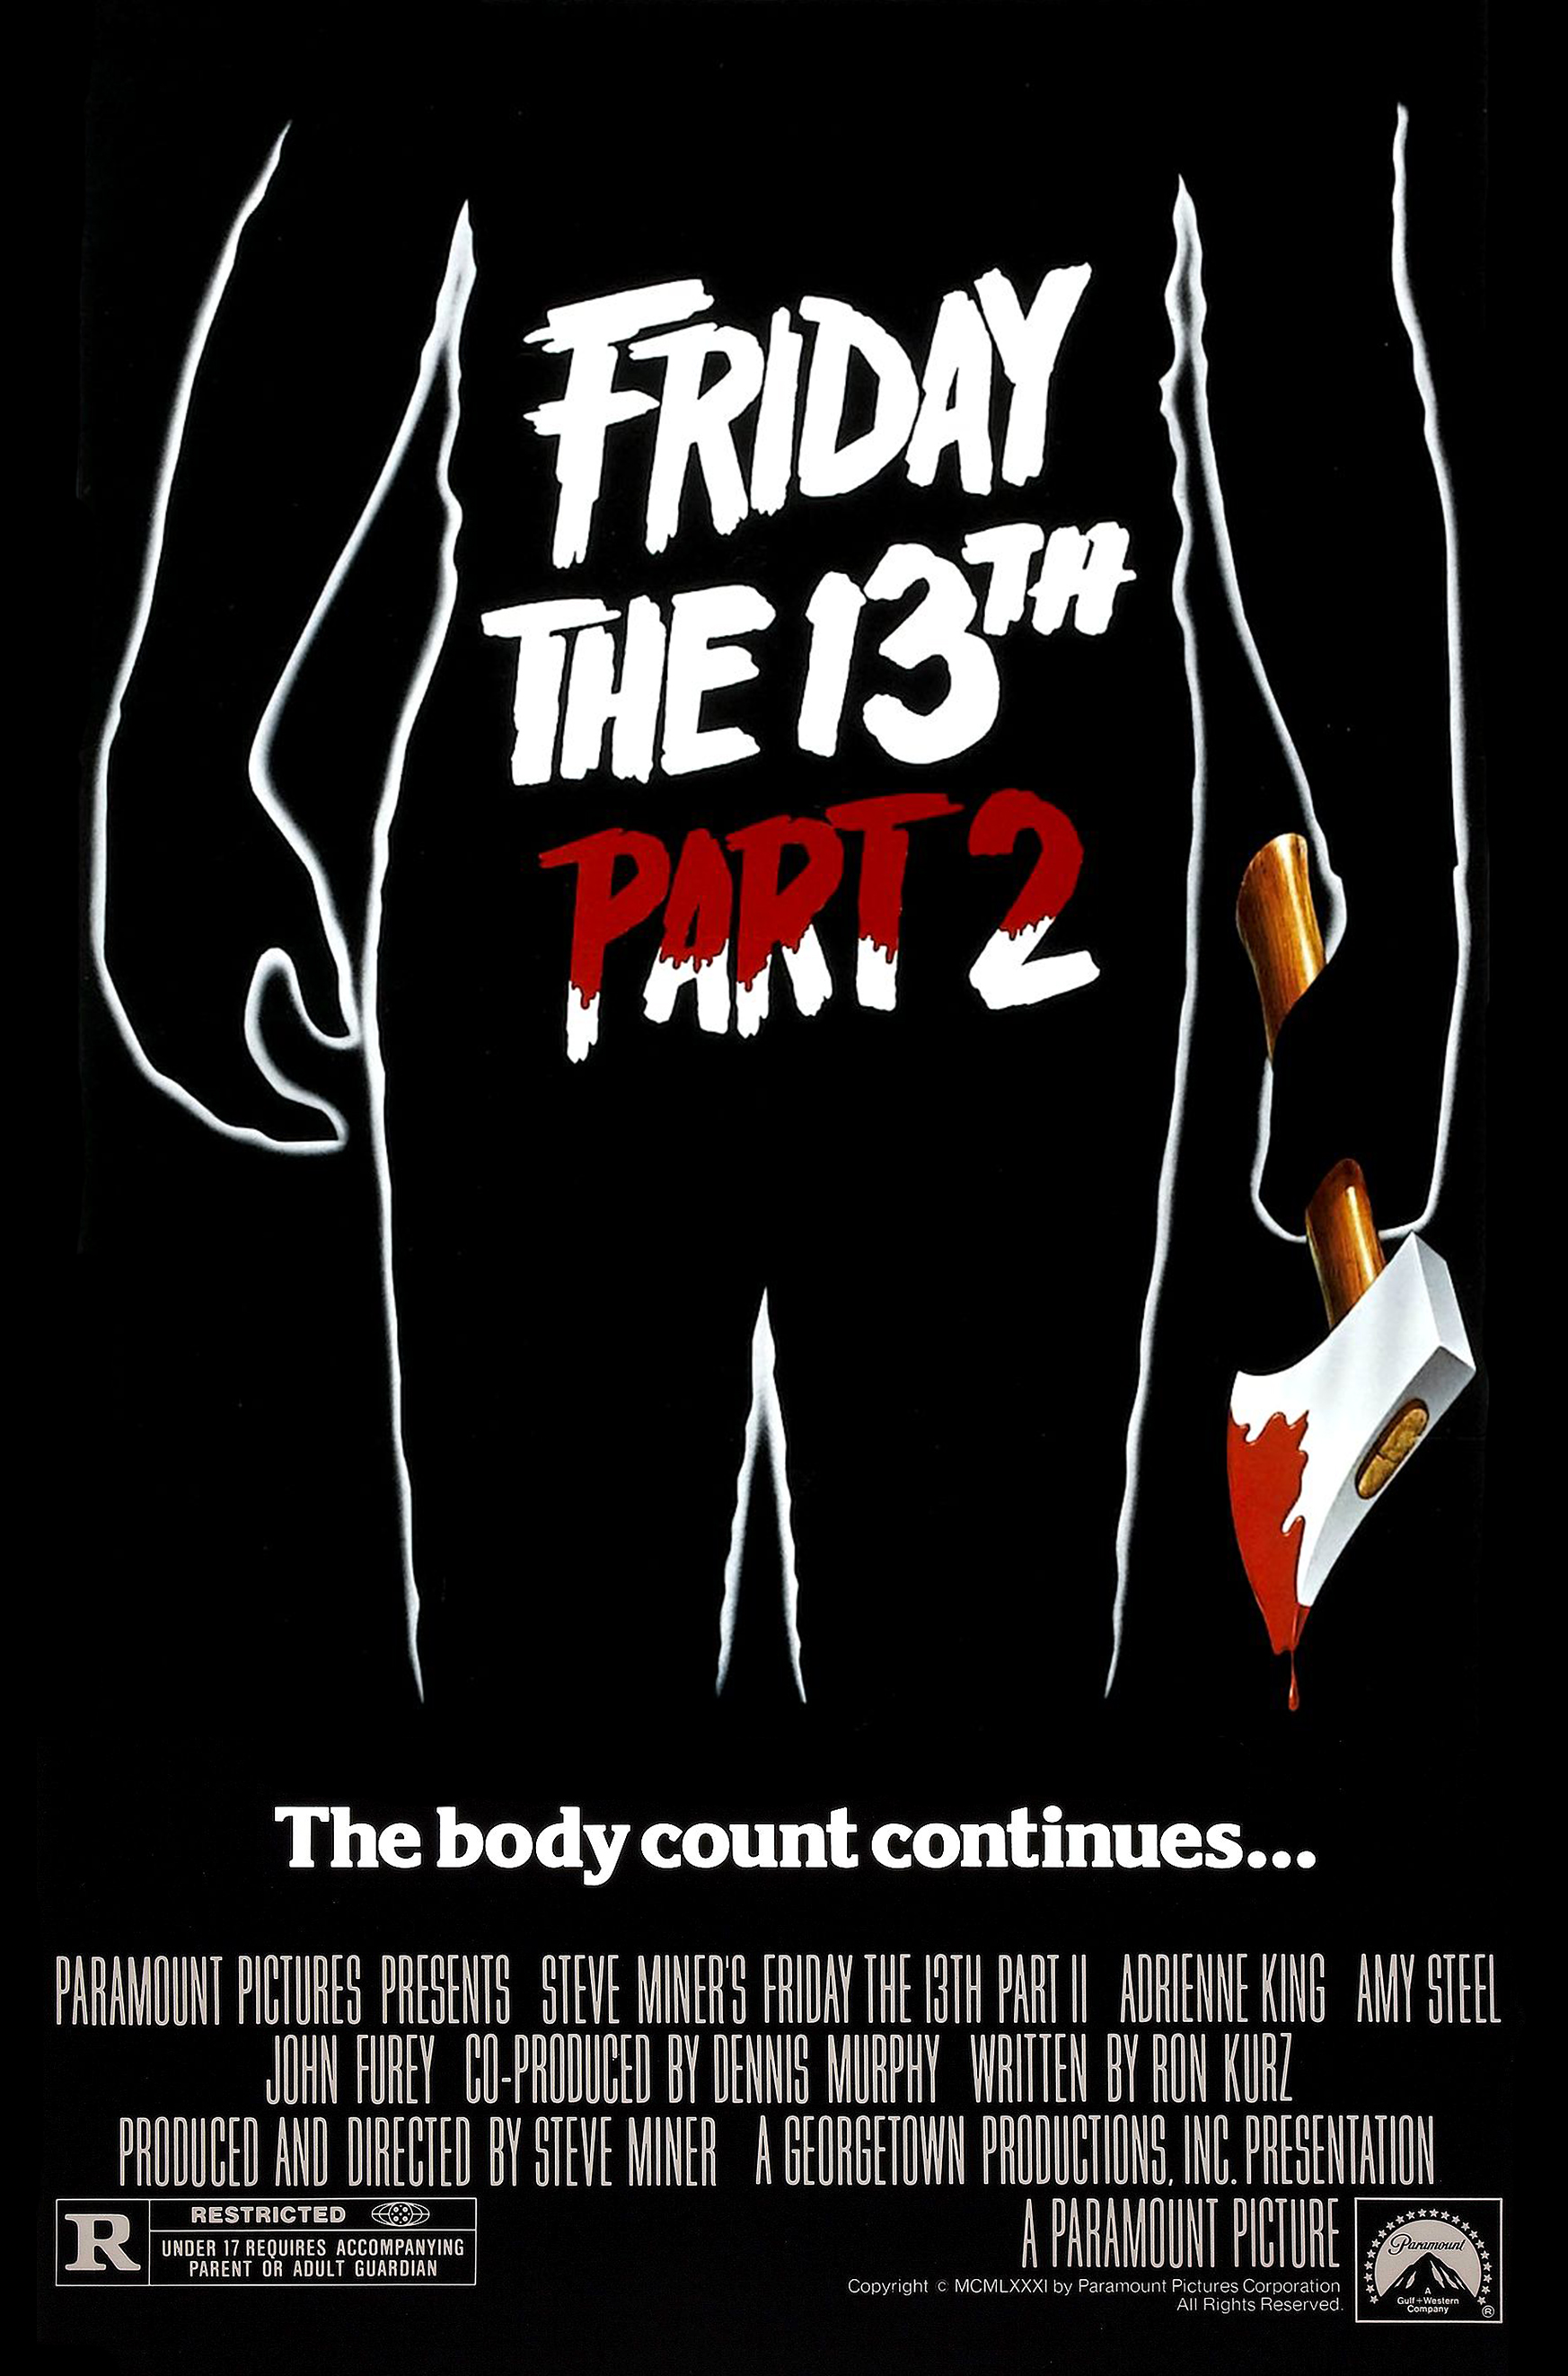 Nonton film Friday The 13th Part 2 layarkaca21 indoxx1 ganool online streaming terbaru